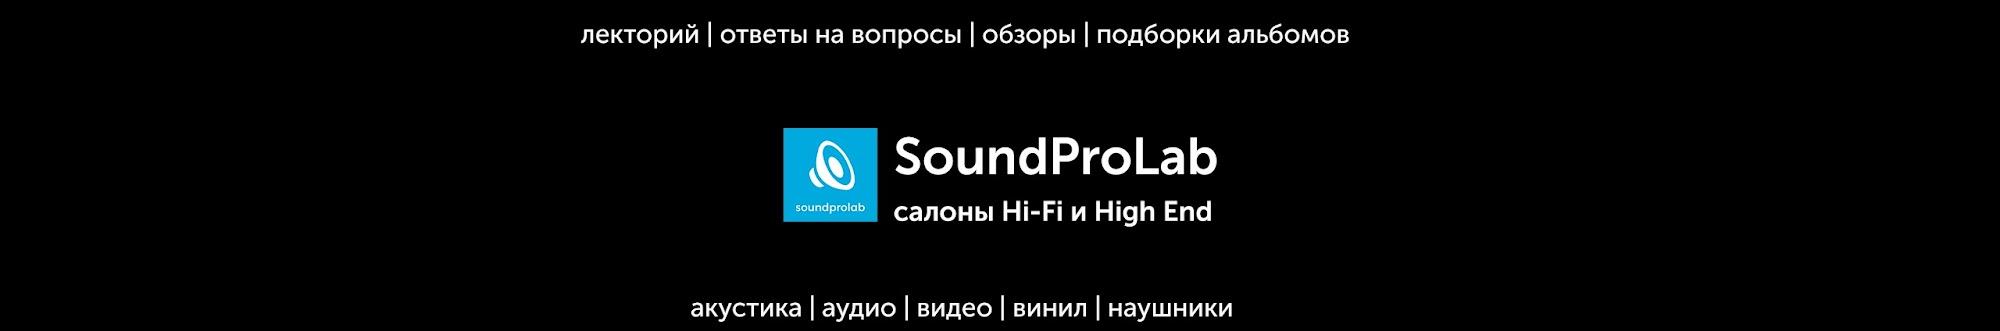 SoundProLab